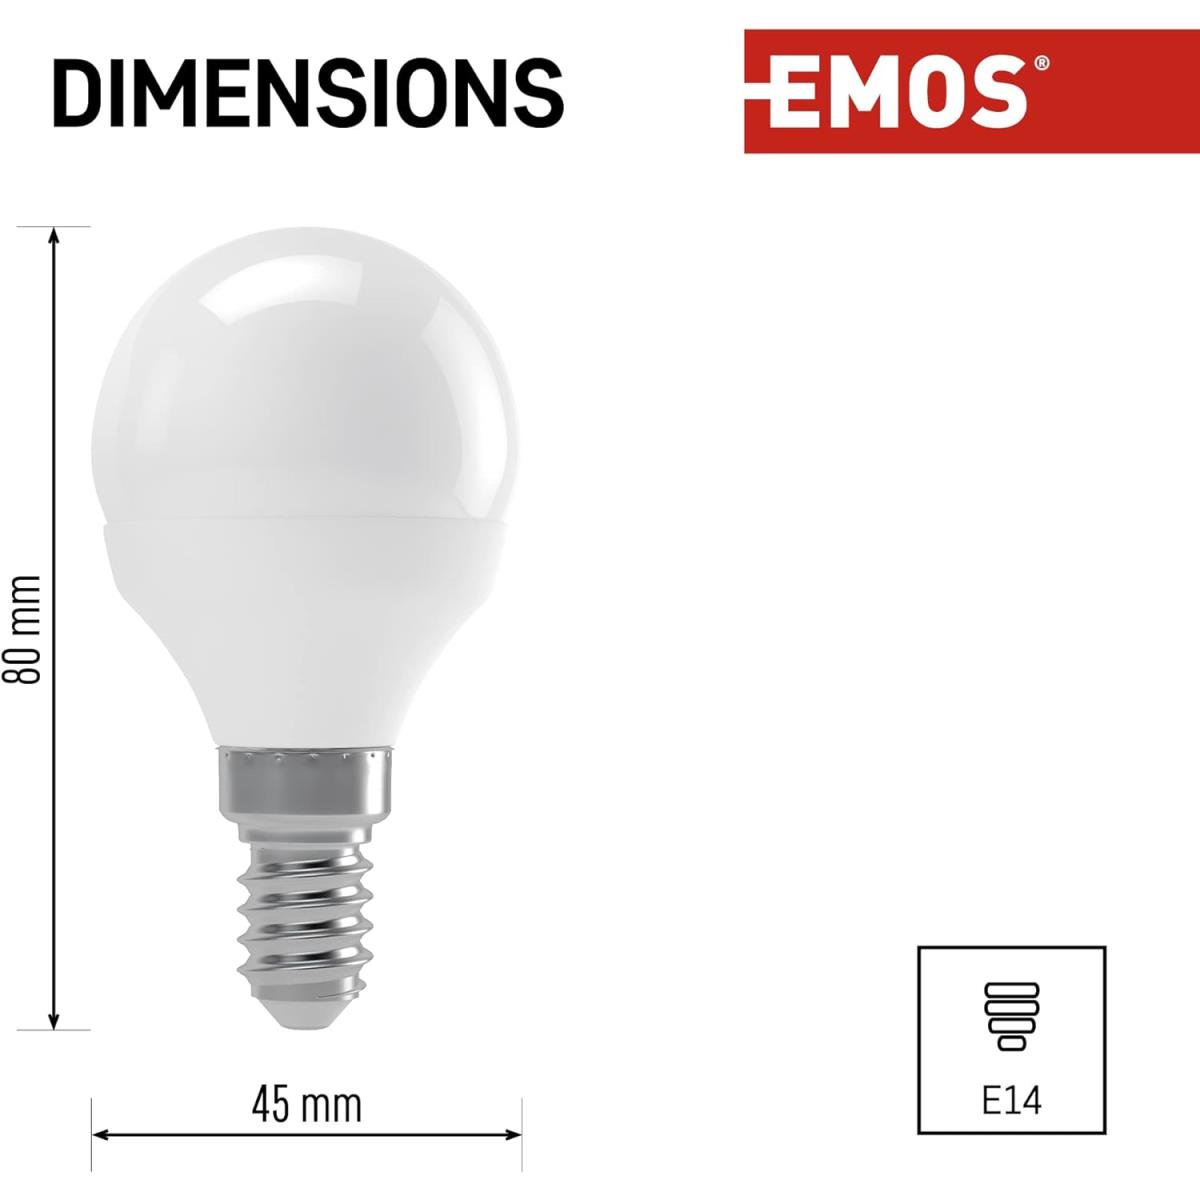 LED Lampe Mini 8,3W Glühbirne E14 Sockel 900lm Neturalweiß 20000 Std Leuchtdauer,EMOS ,ZL3912, 8592920089880